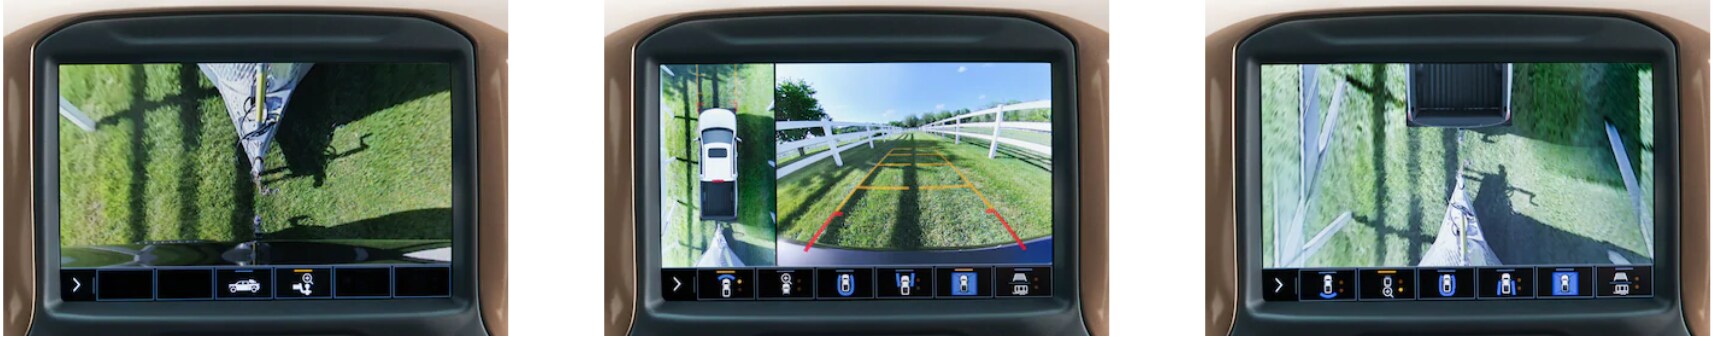 Camera Technology in the Chevrolet Silverado